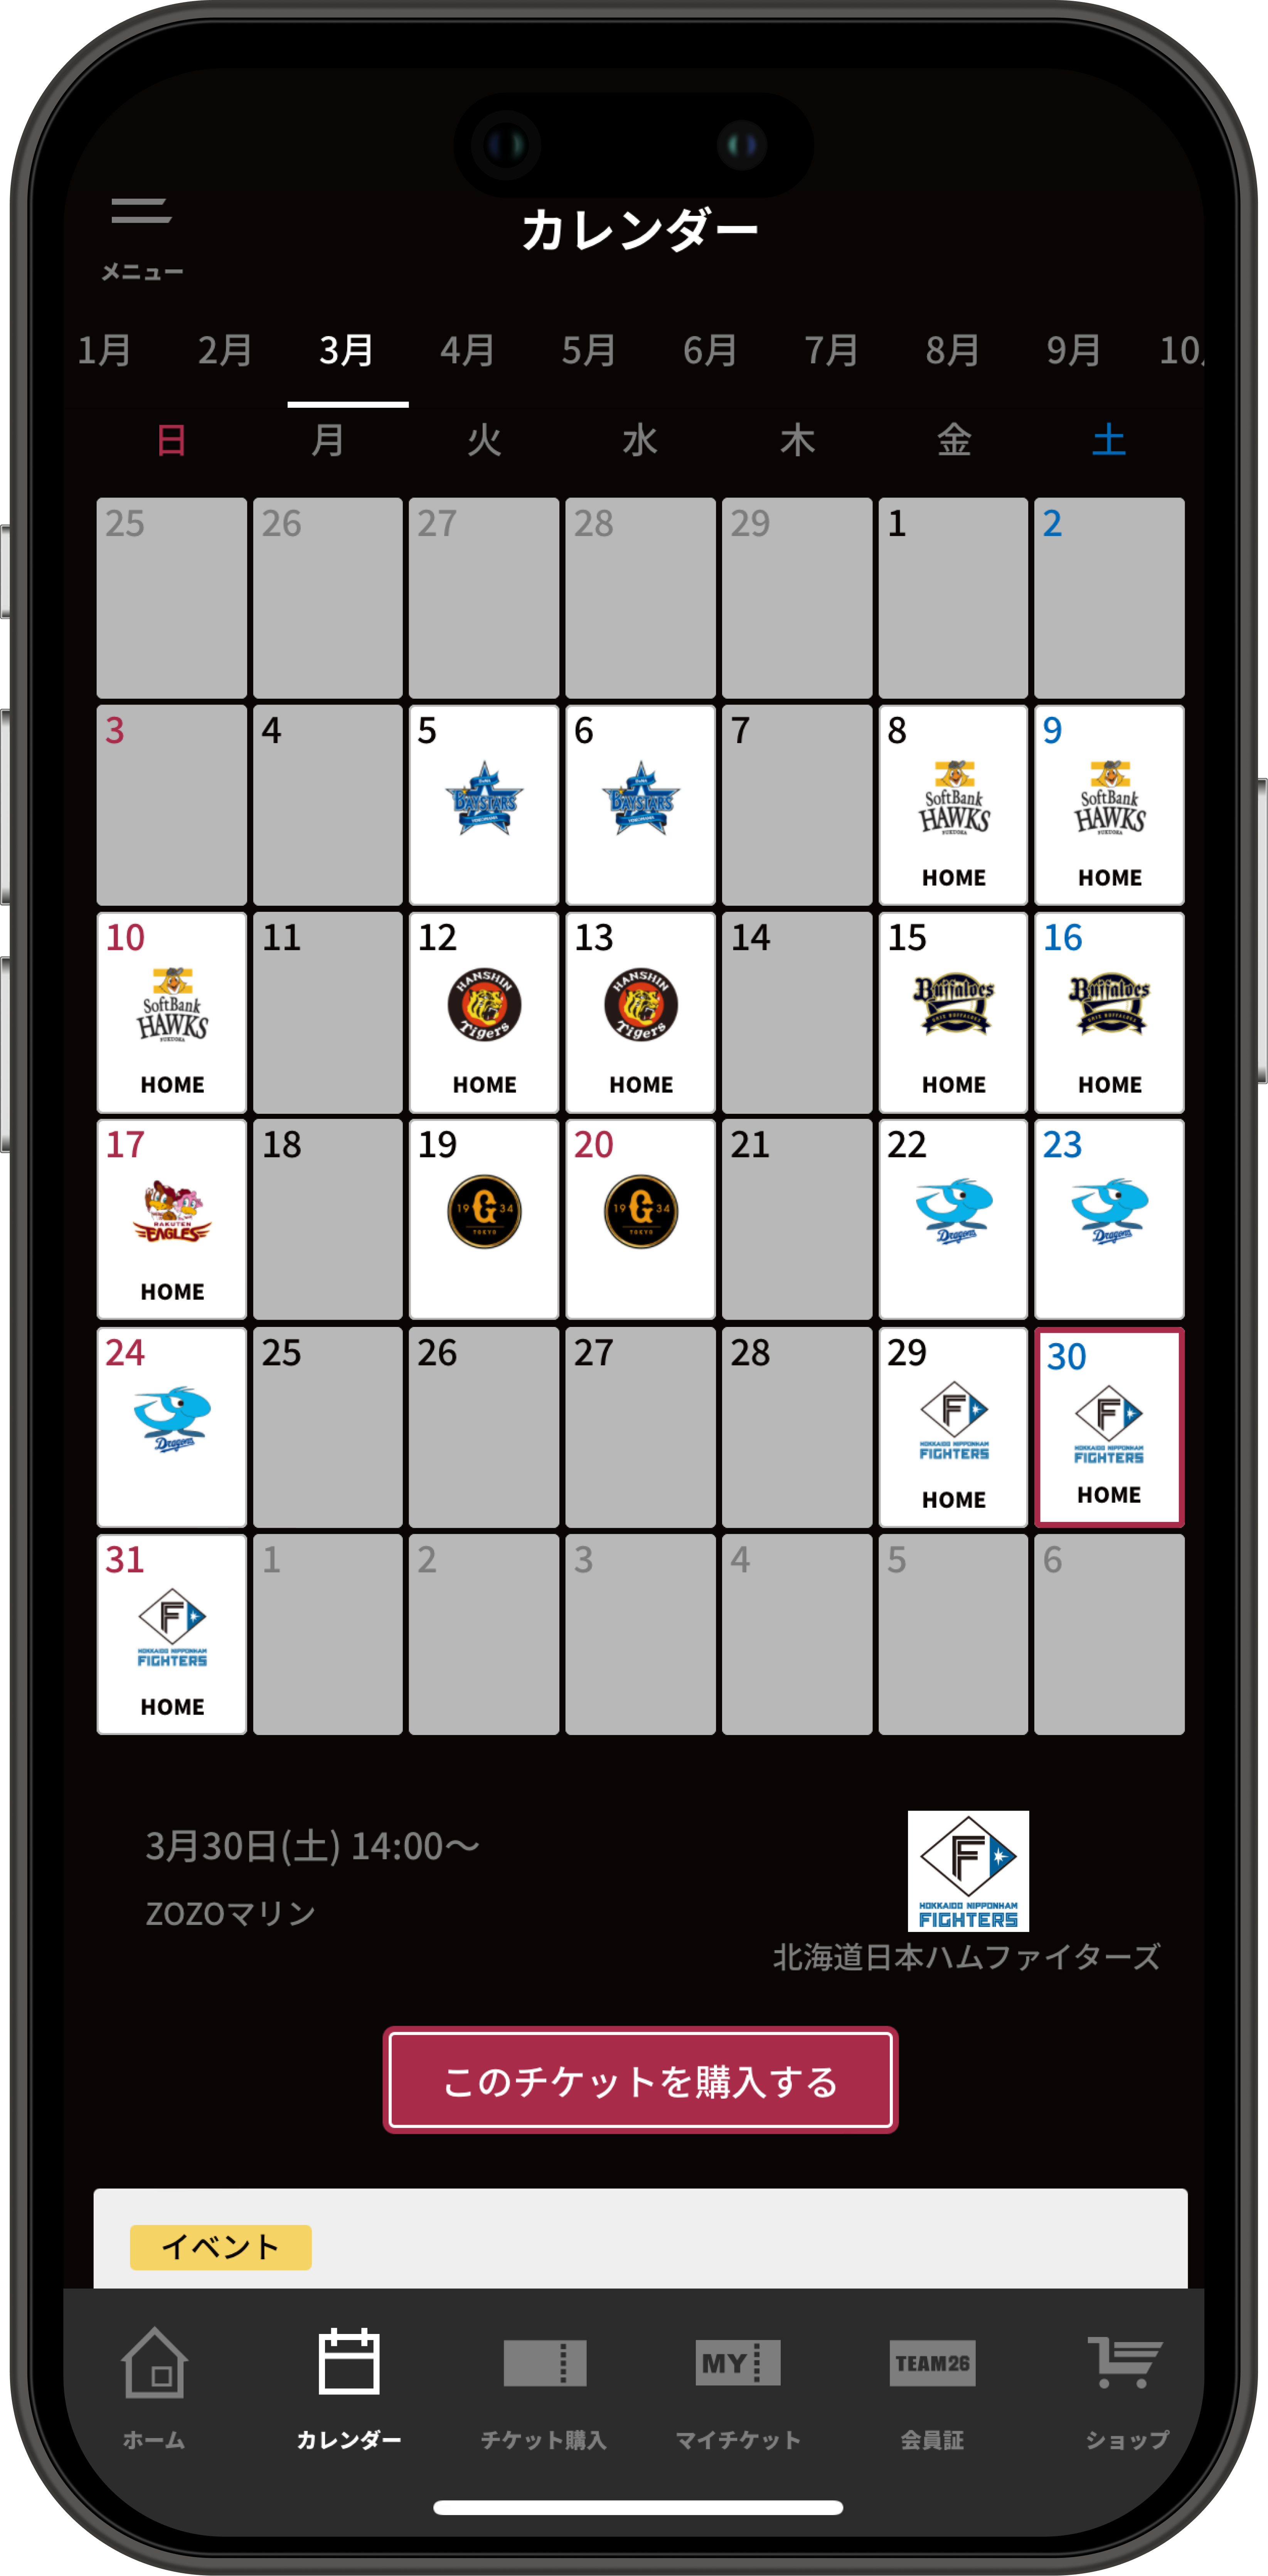 MARINES APP カレンダー画面